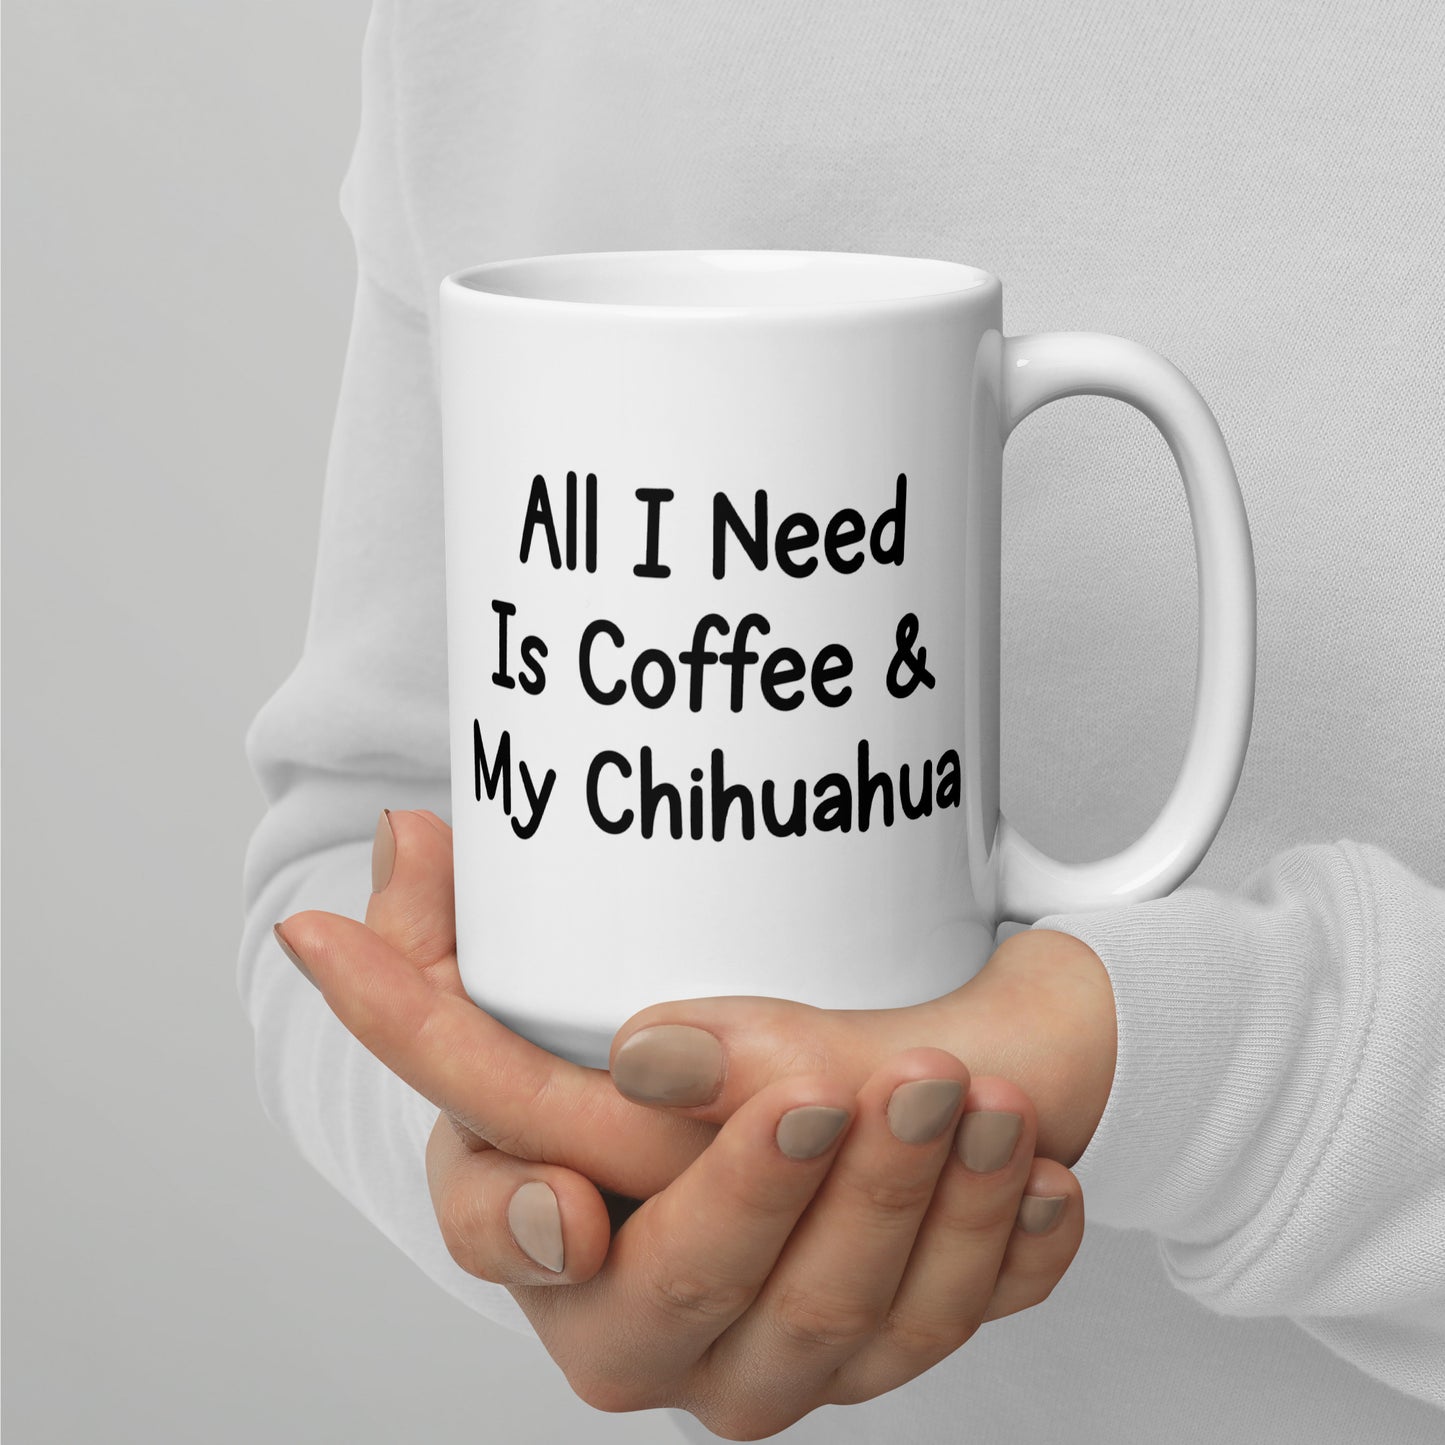 All I need is coffee & my Chihuahua mug by Dog Artistry.